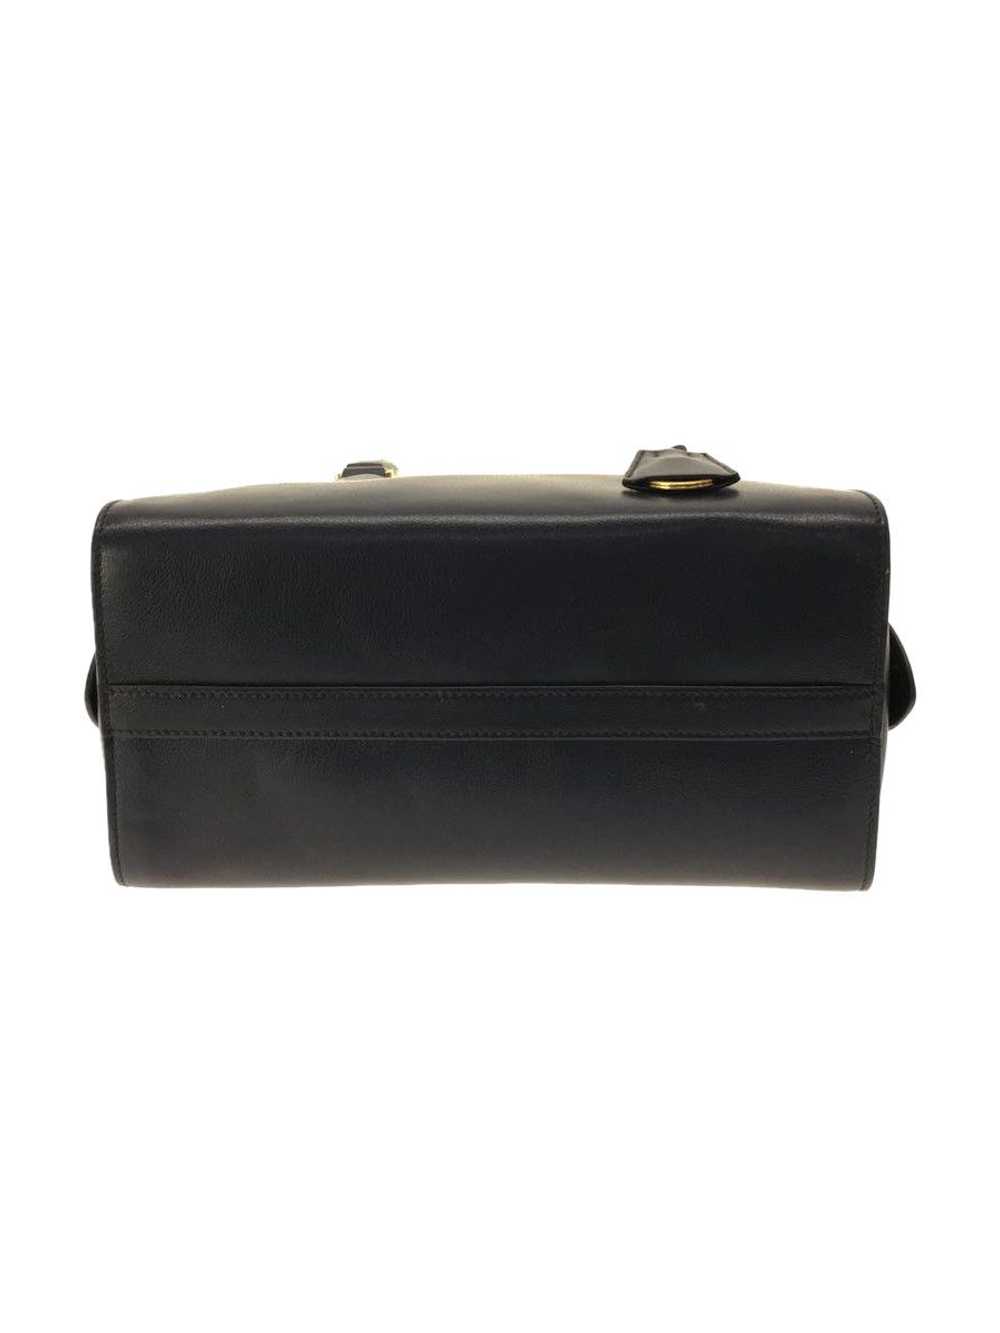 Prada Prada Shoulder Bag Leather Handbag Navy - image 6